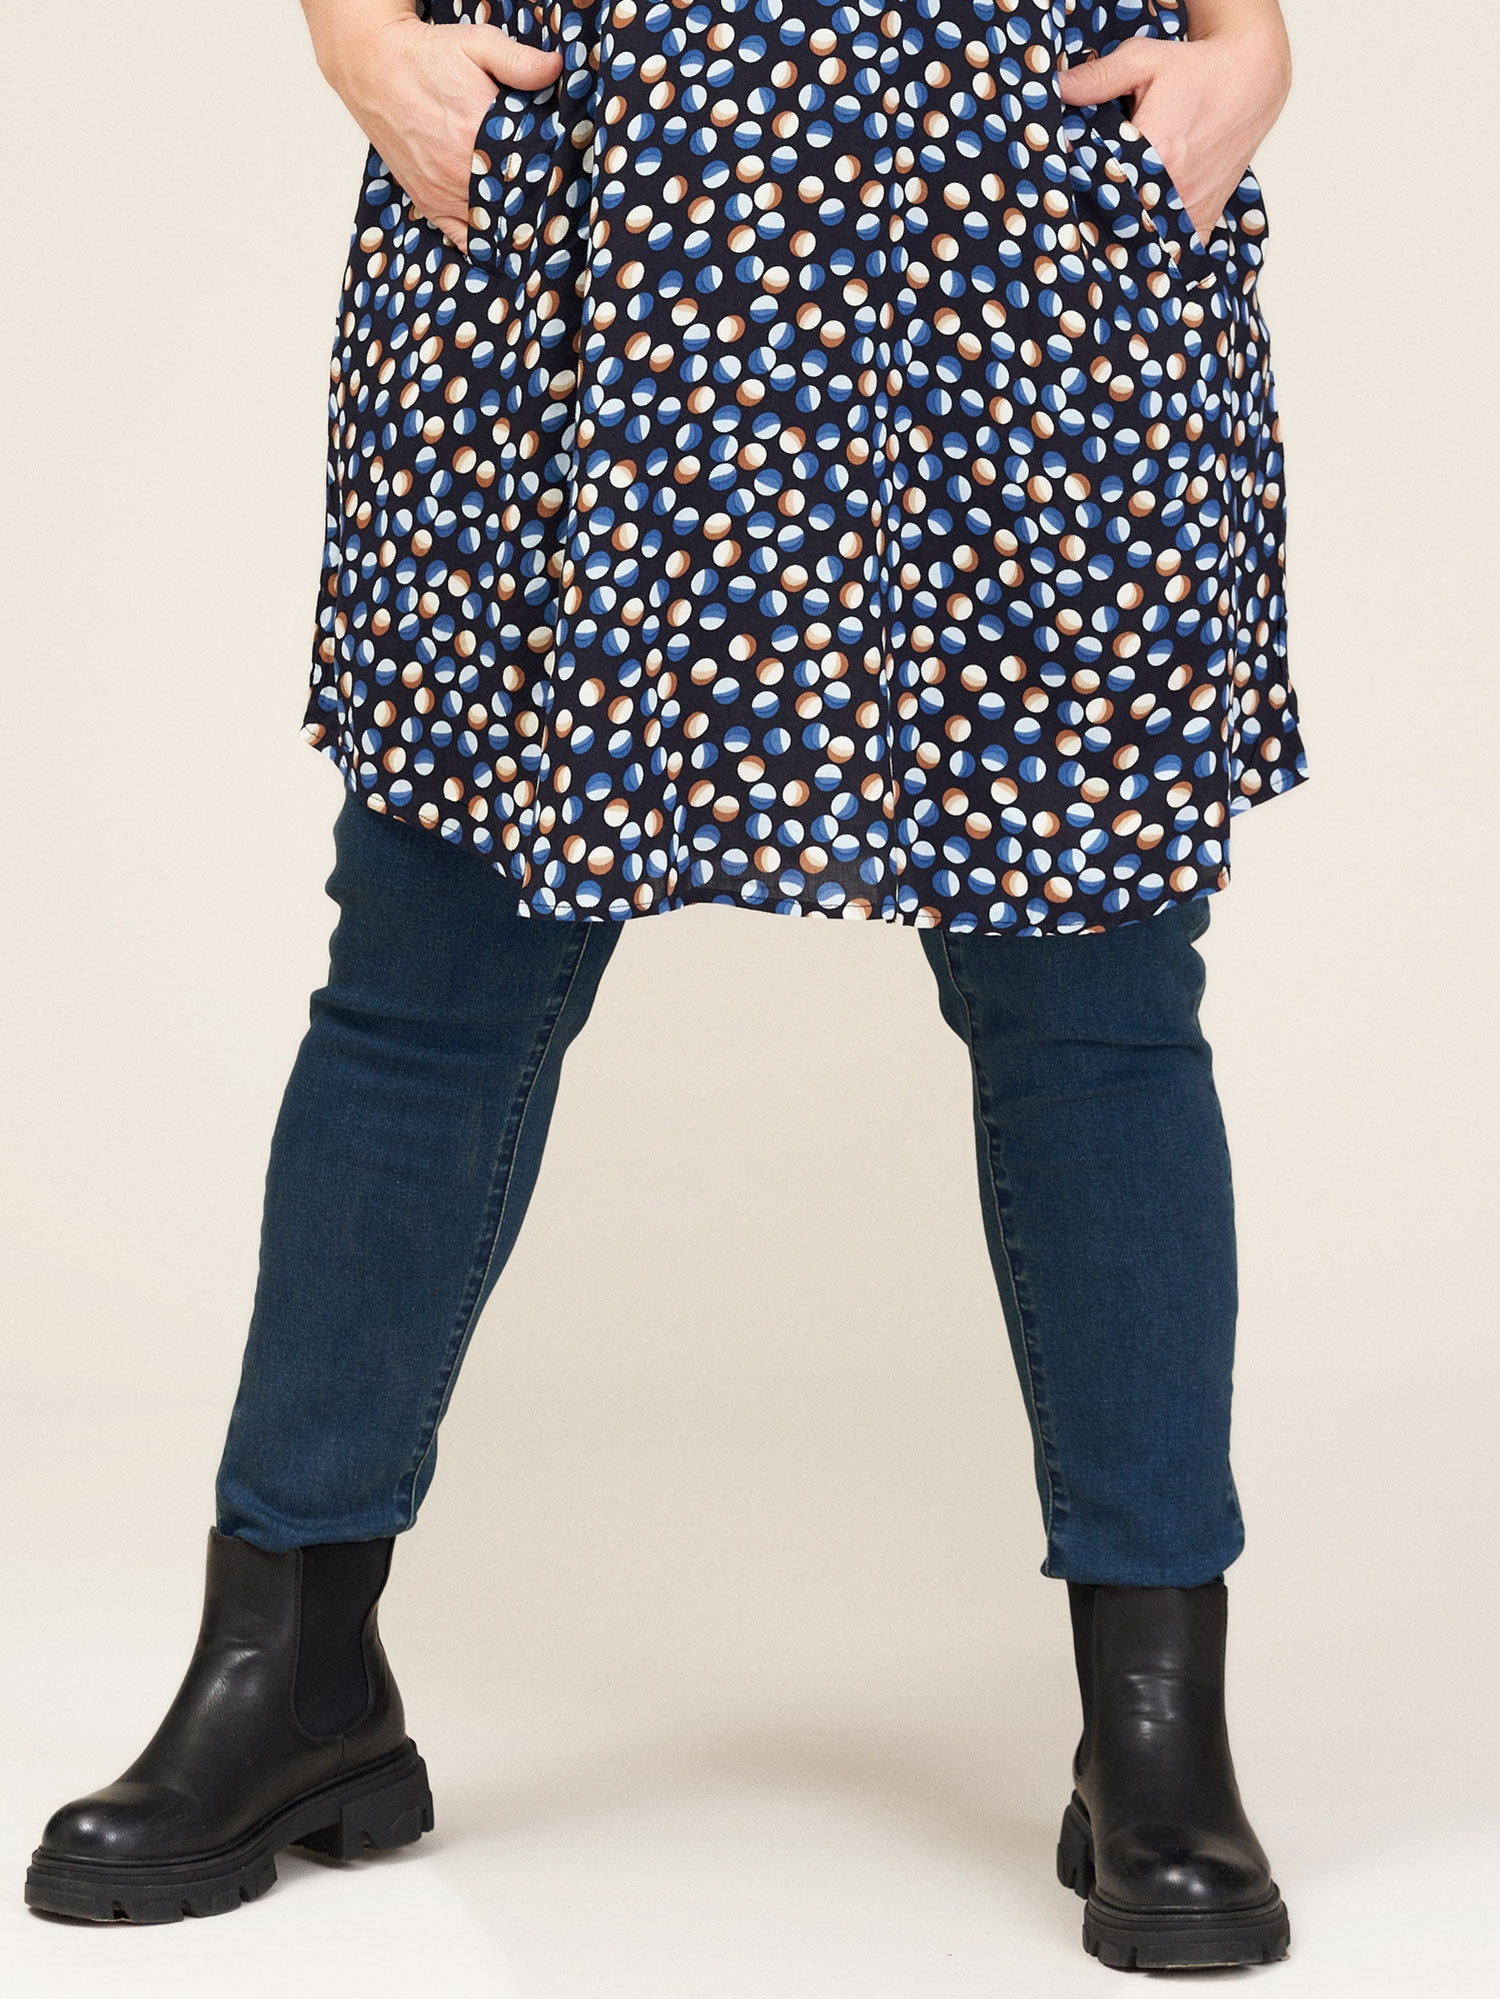 JOHANNE - Viskosskjorttunika i svart med fickor